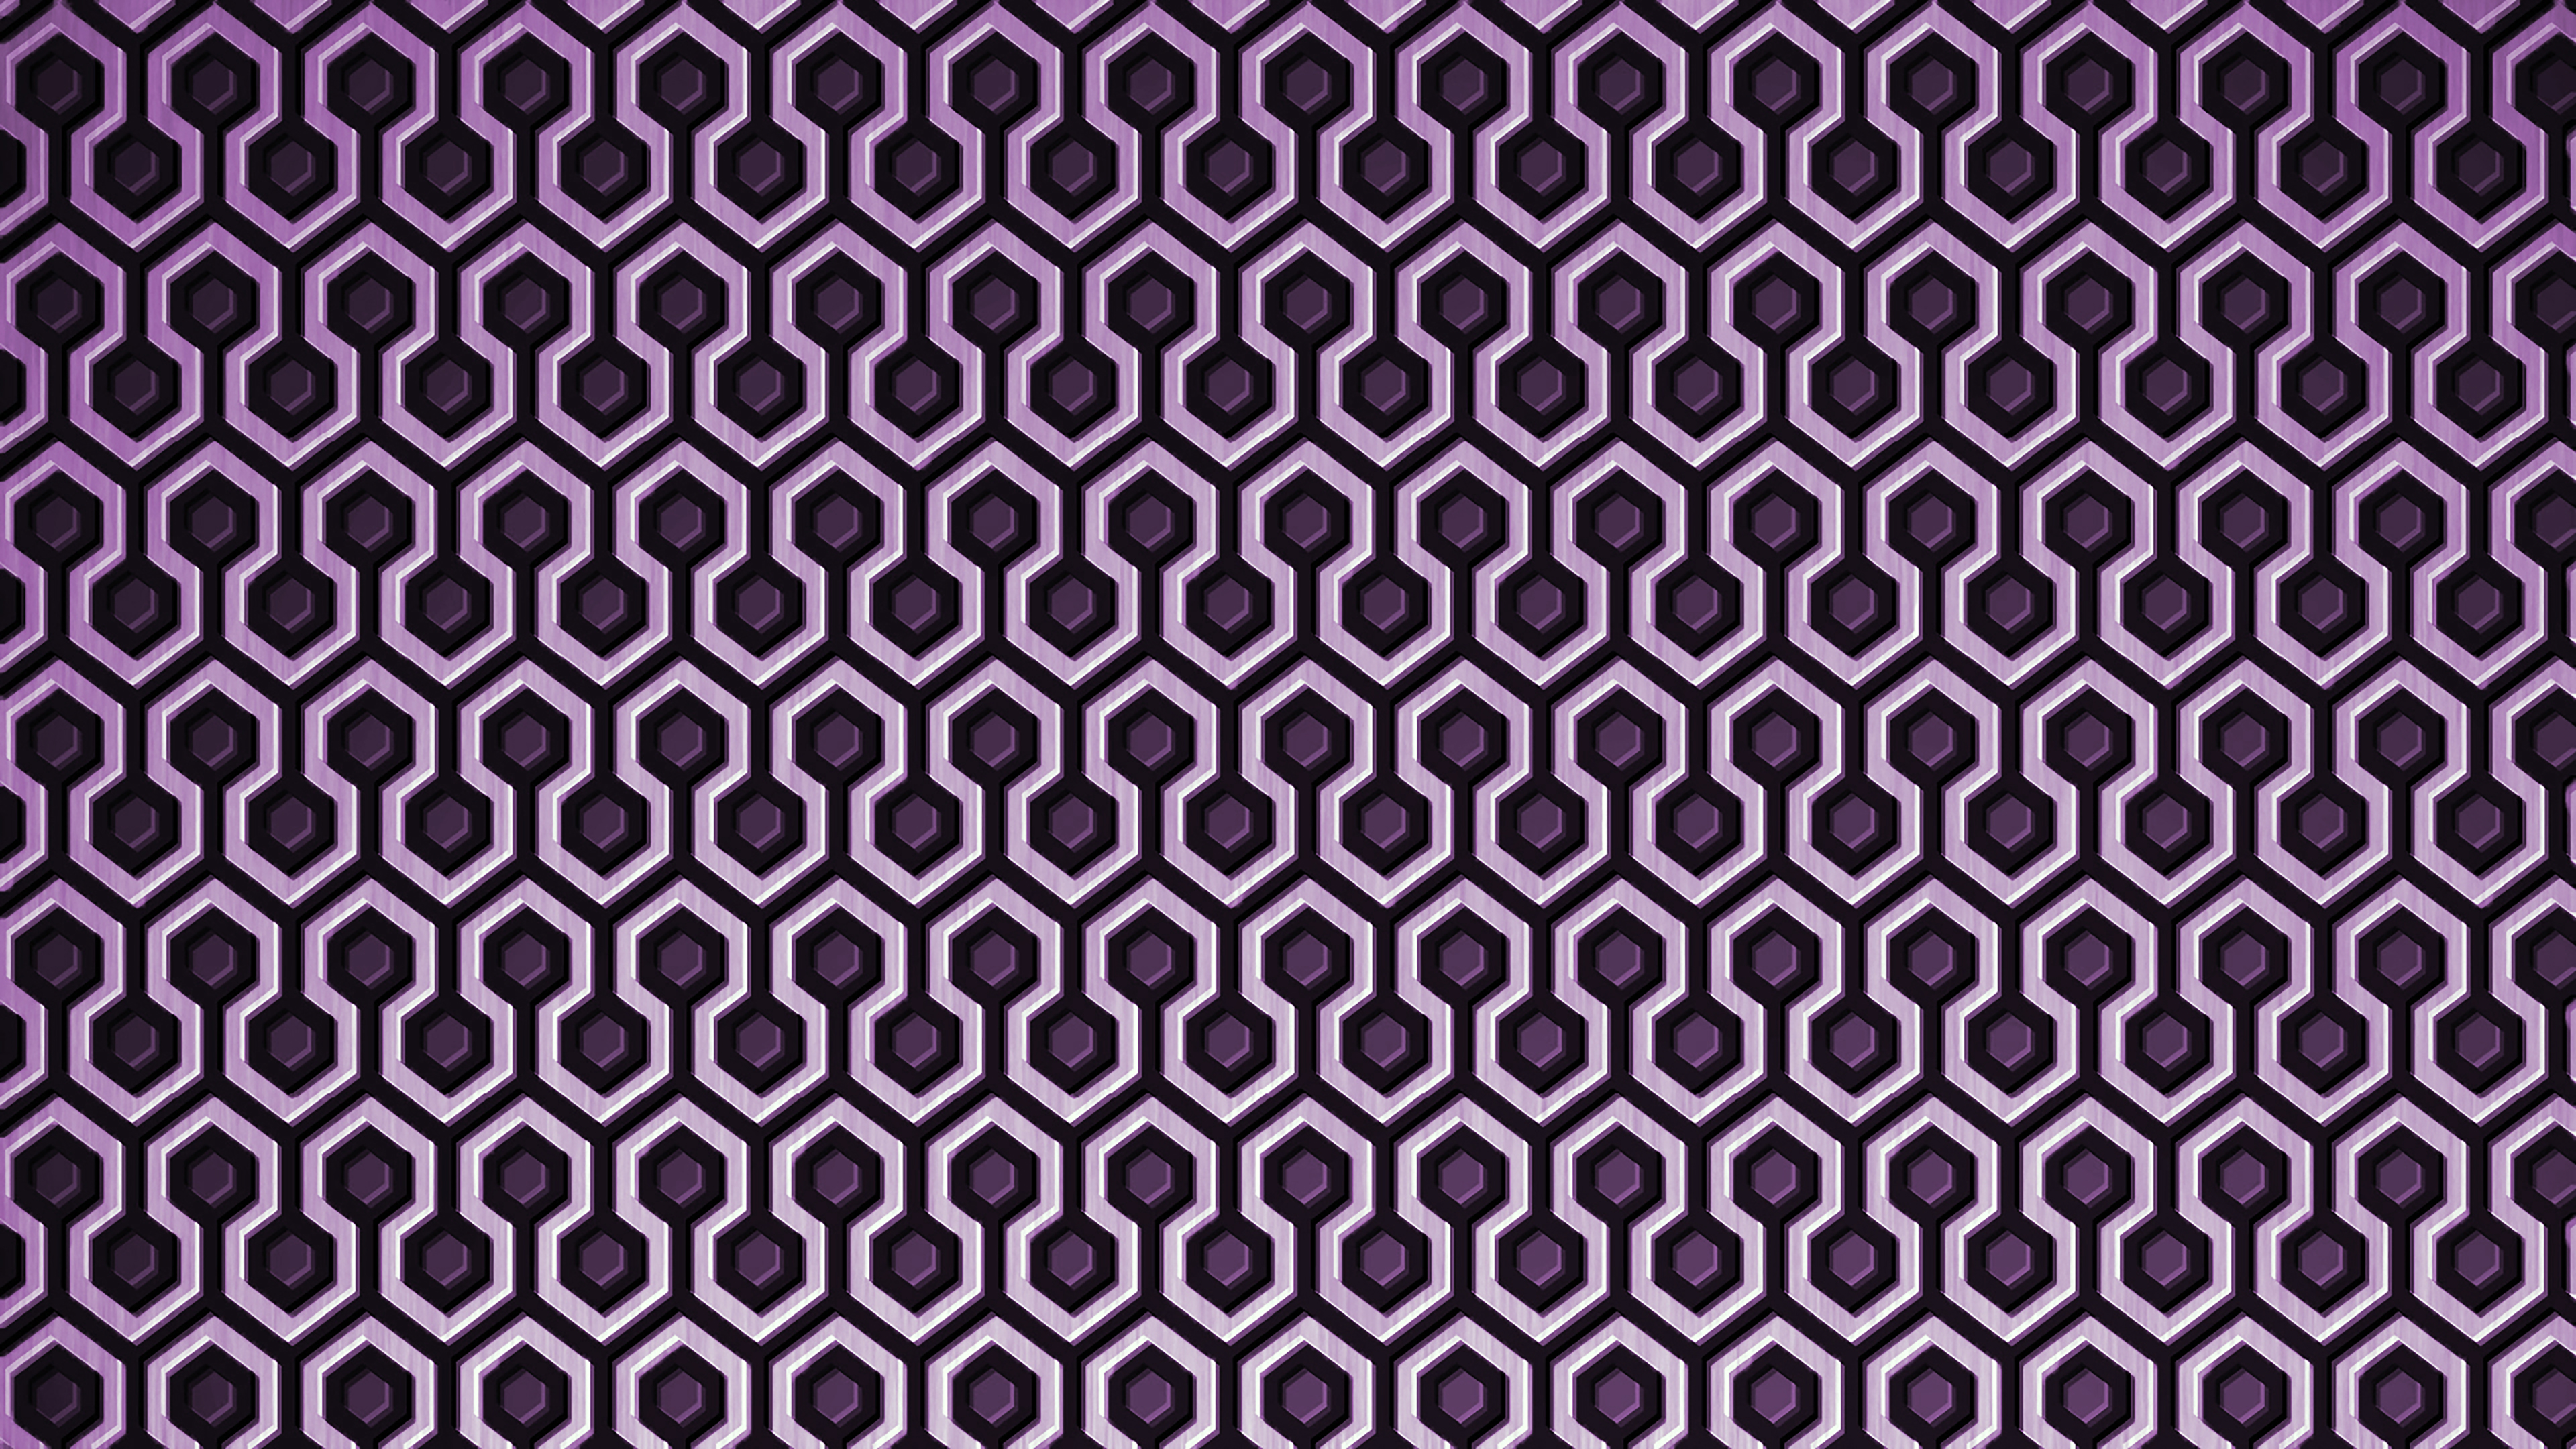 General 3840x2160 hexagon pattern The Shining digital art